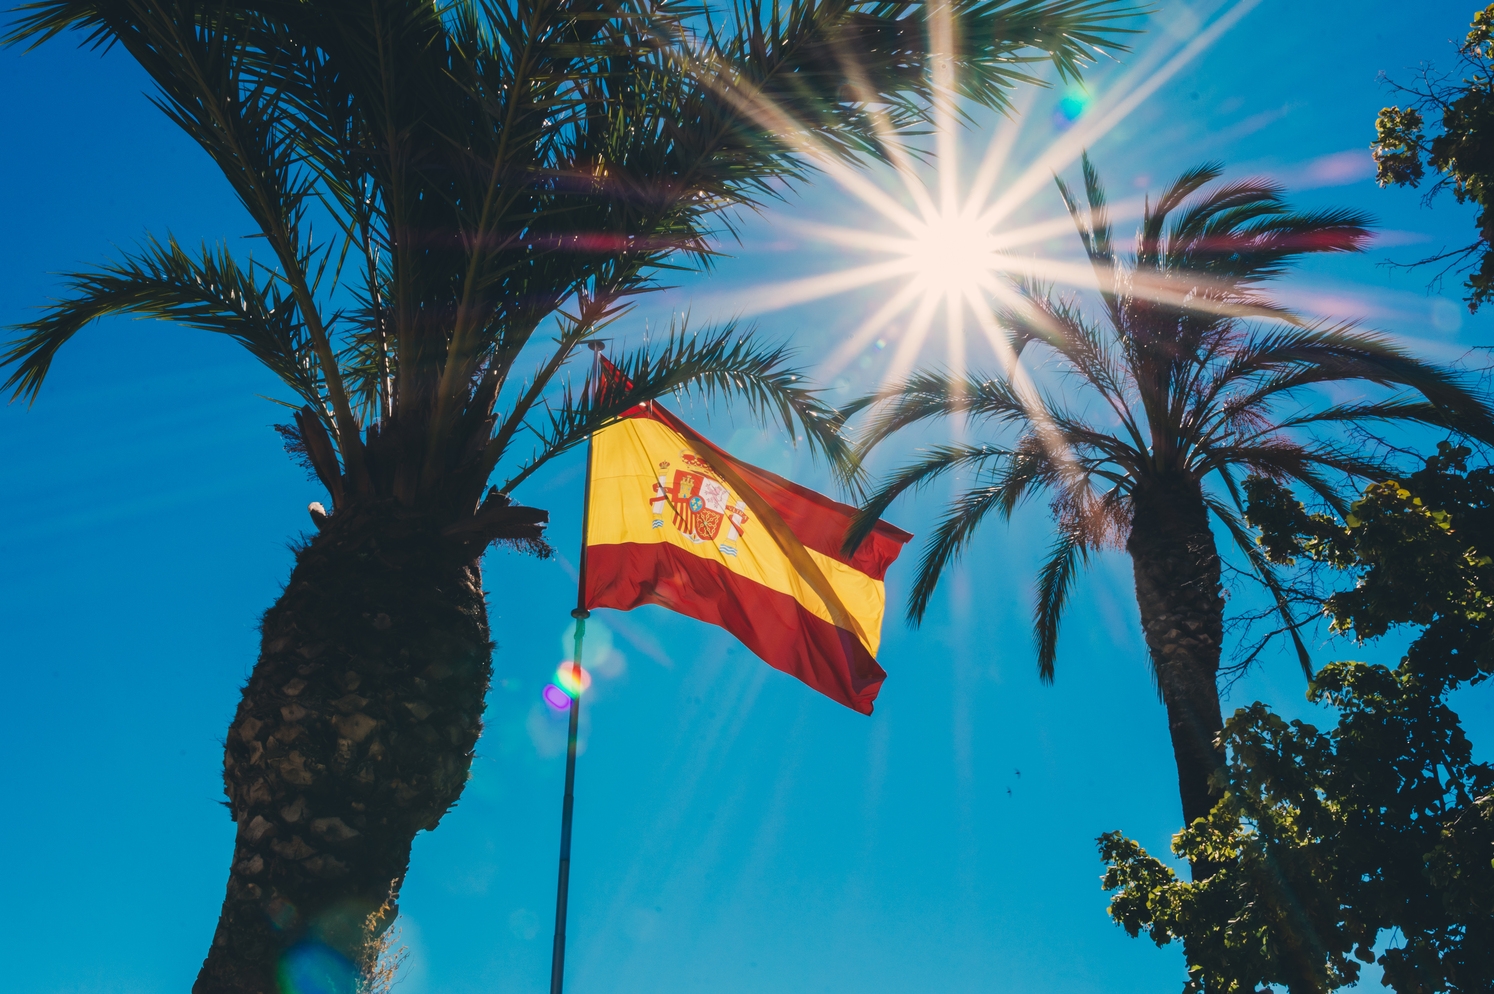 big-spanish-flag-palm-trees-sun-and-blue-sky-2021-10-21-02-29-42-utc-1.jpg